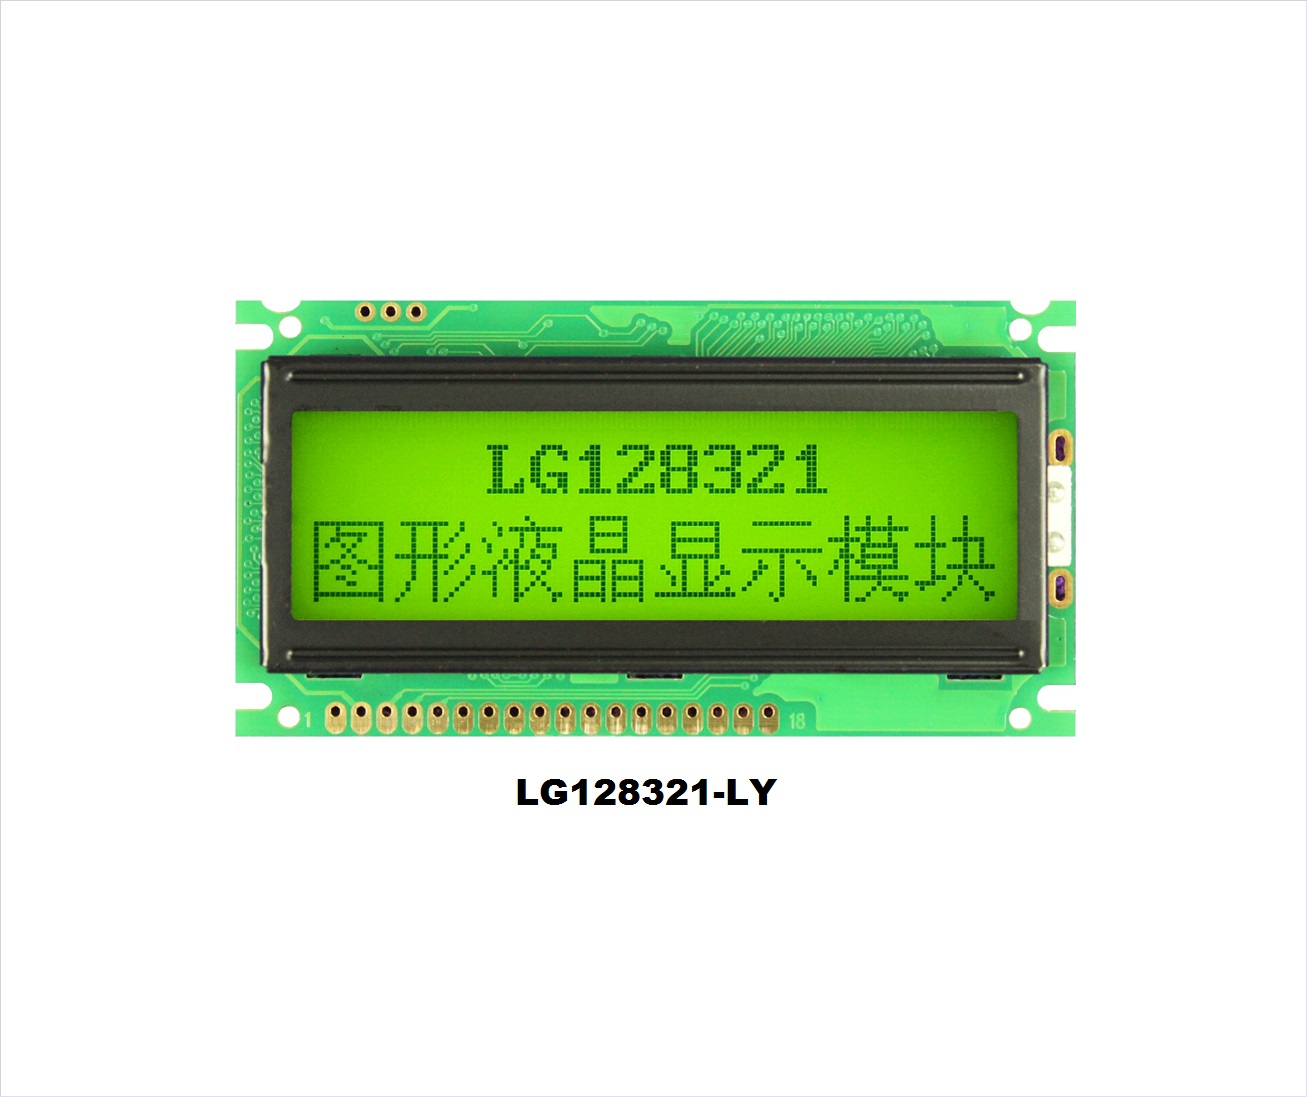 LG128321-LY